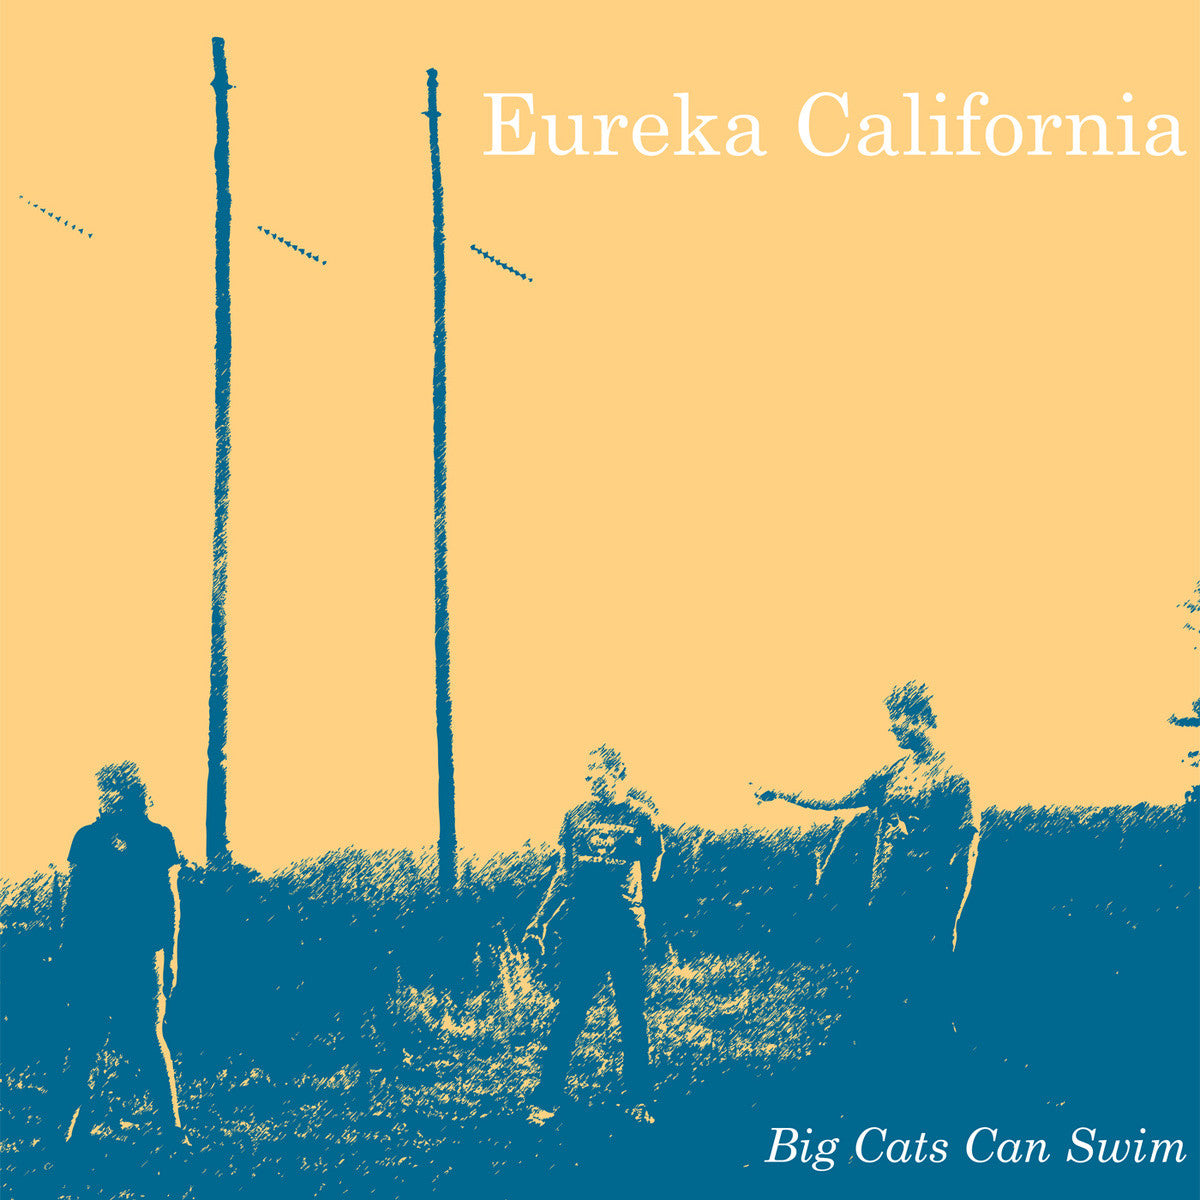 EUREKA CALIFORNIA "Big Cats Can Swim" cassette tape / vinyl LP